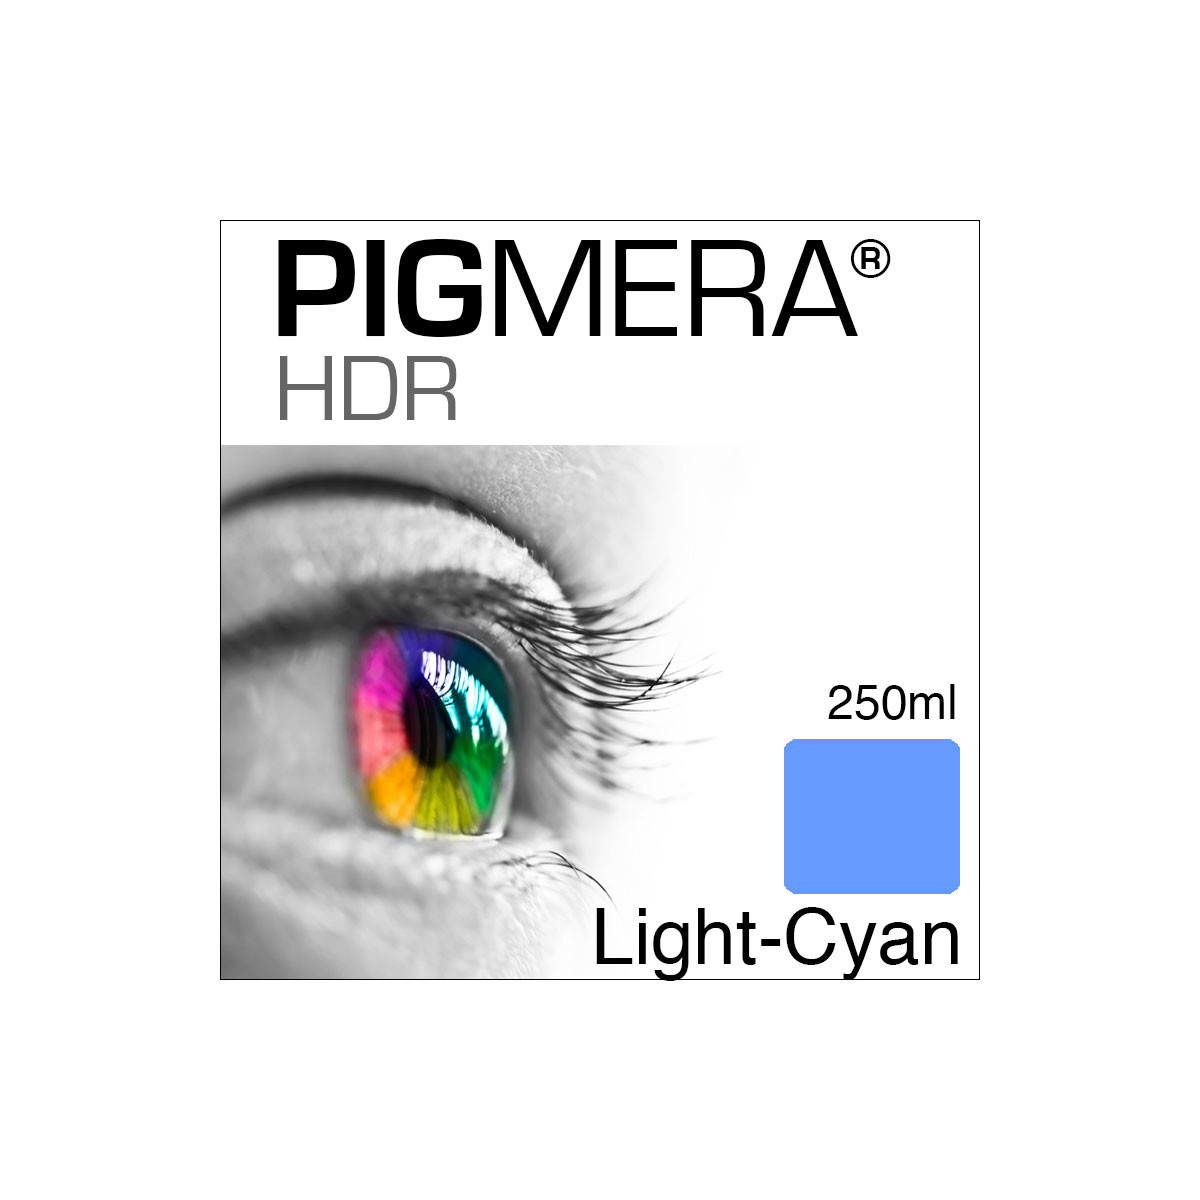 farbenwerk Pigmera HDR Bottle Light-Cyan 250ml